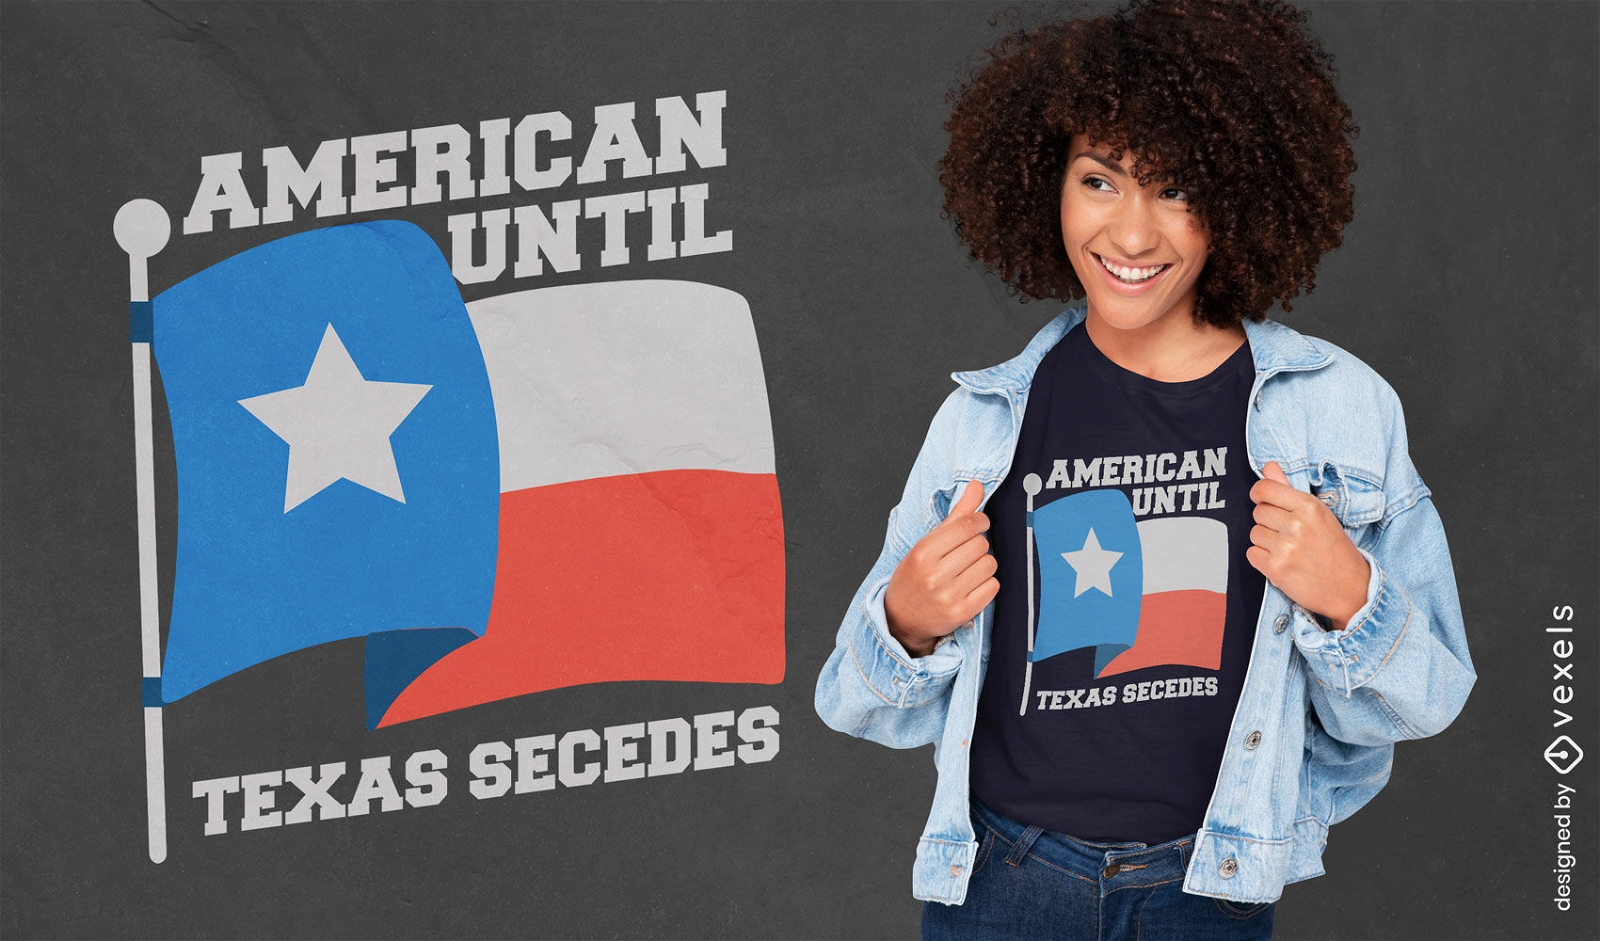 American until Texas secedes patriotic t-shirt design